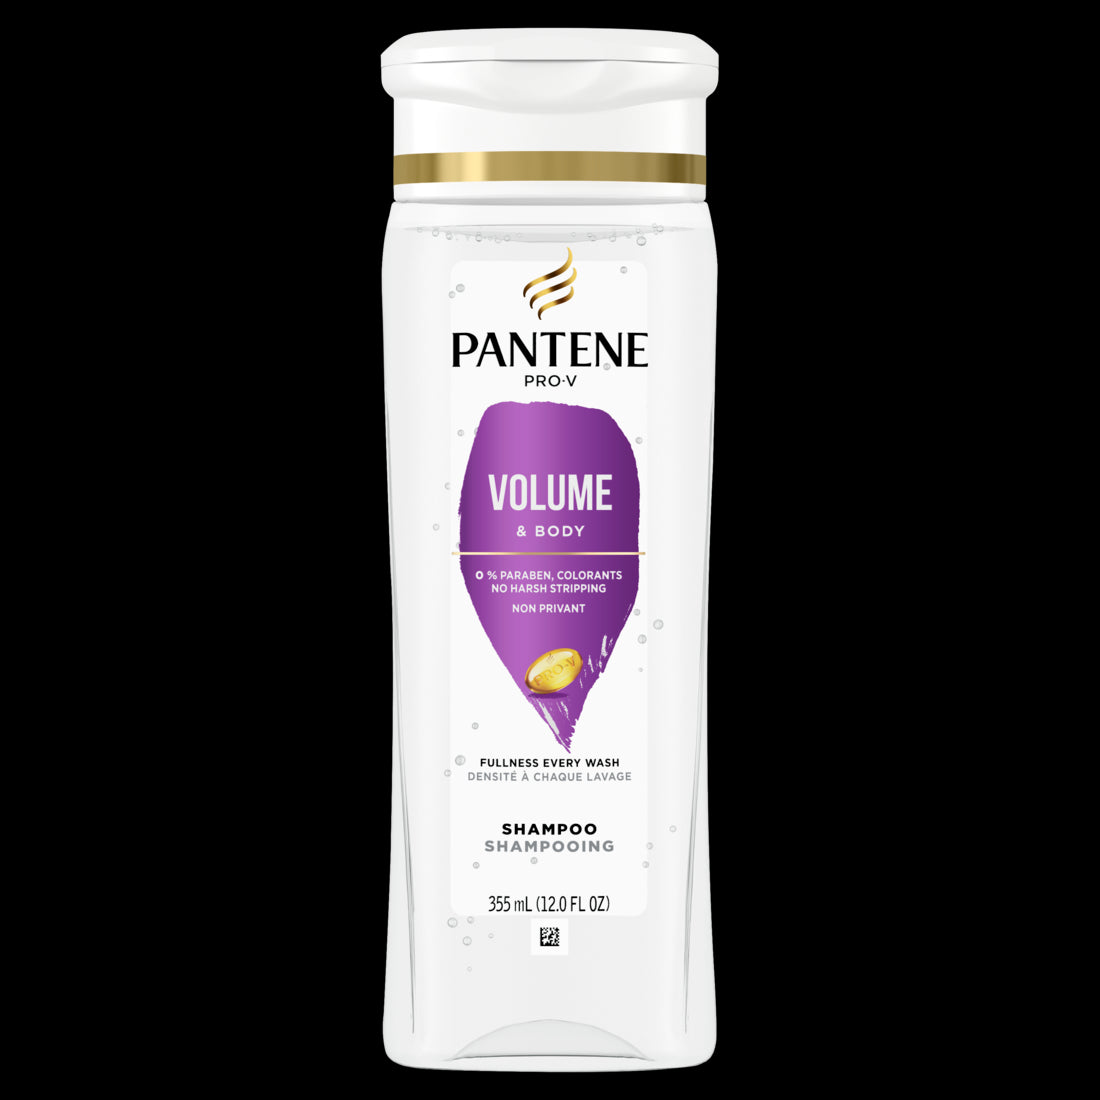 Pantene Shampoo for Fine or Thin Hair Paraben Free - 12oz/6pk